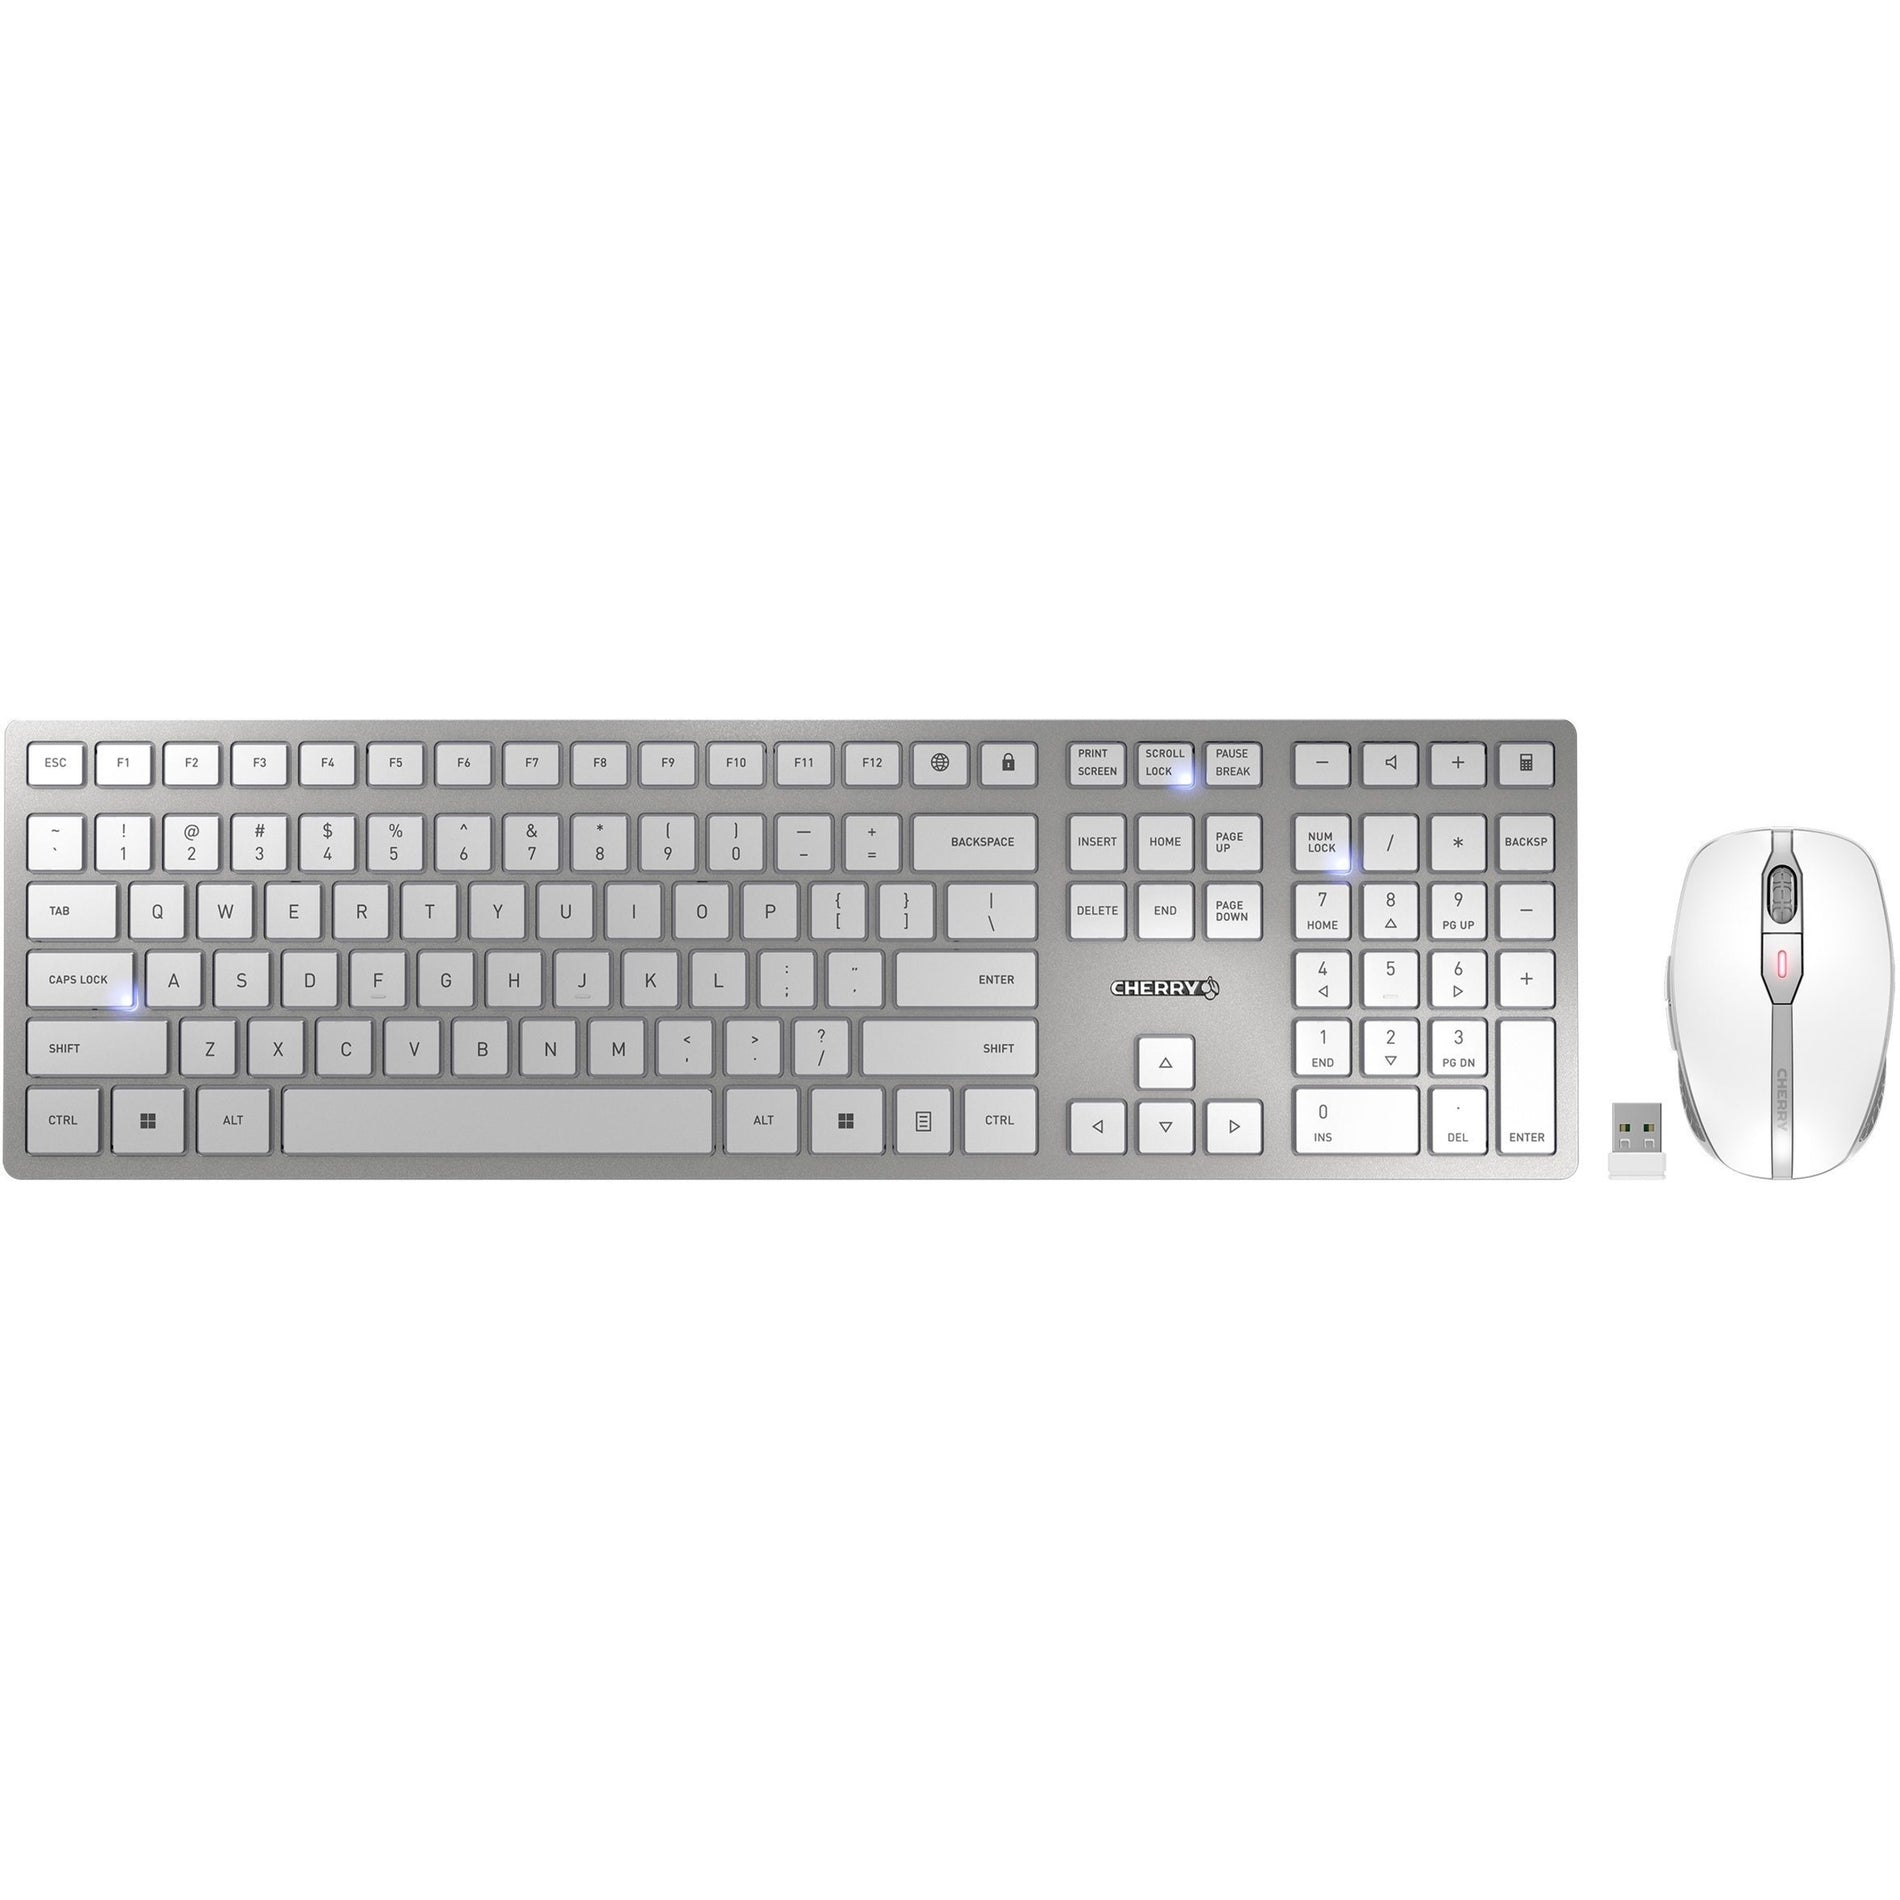 CHERRY JD-9100US-1 DW 9100 SLIM Rechargeable Wireless Desktop Keyboard & Mouse Combo, Silver/White, USB